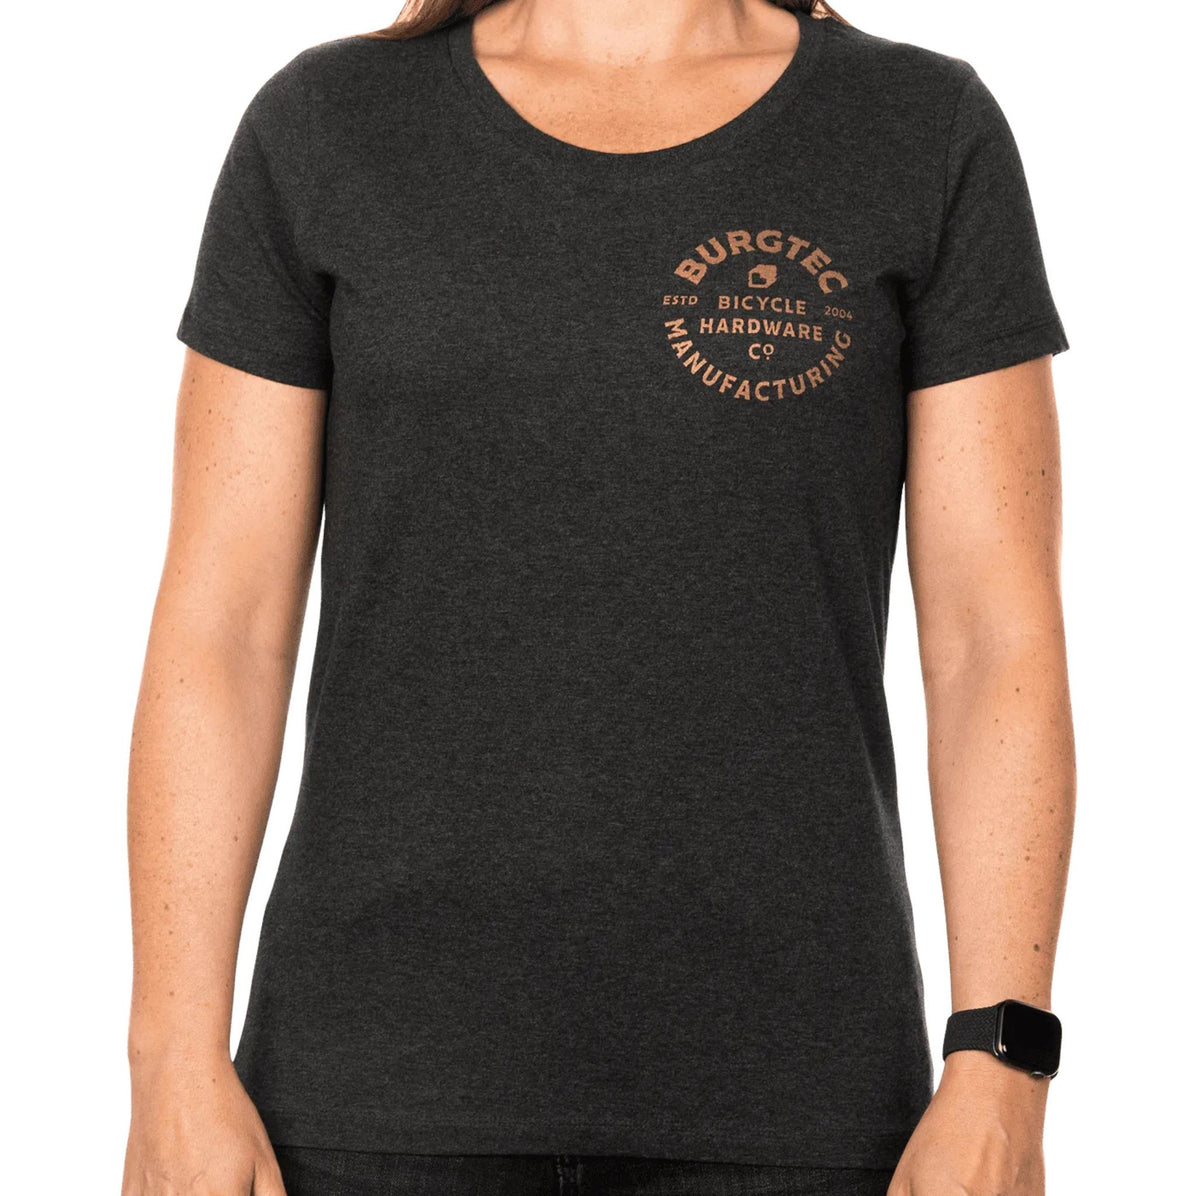 Burgtec Women's Gold Stamp T-Shirt